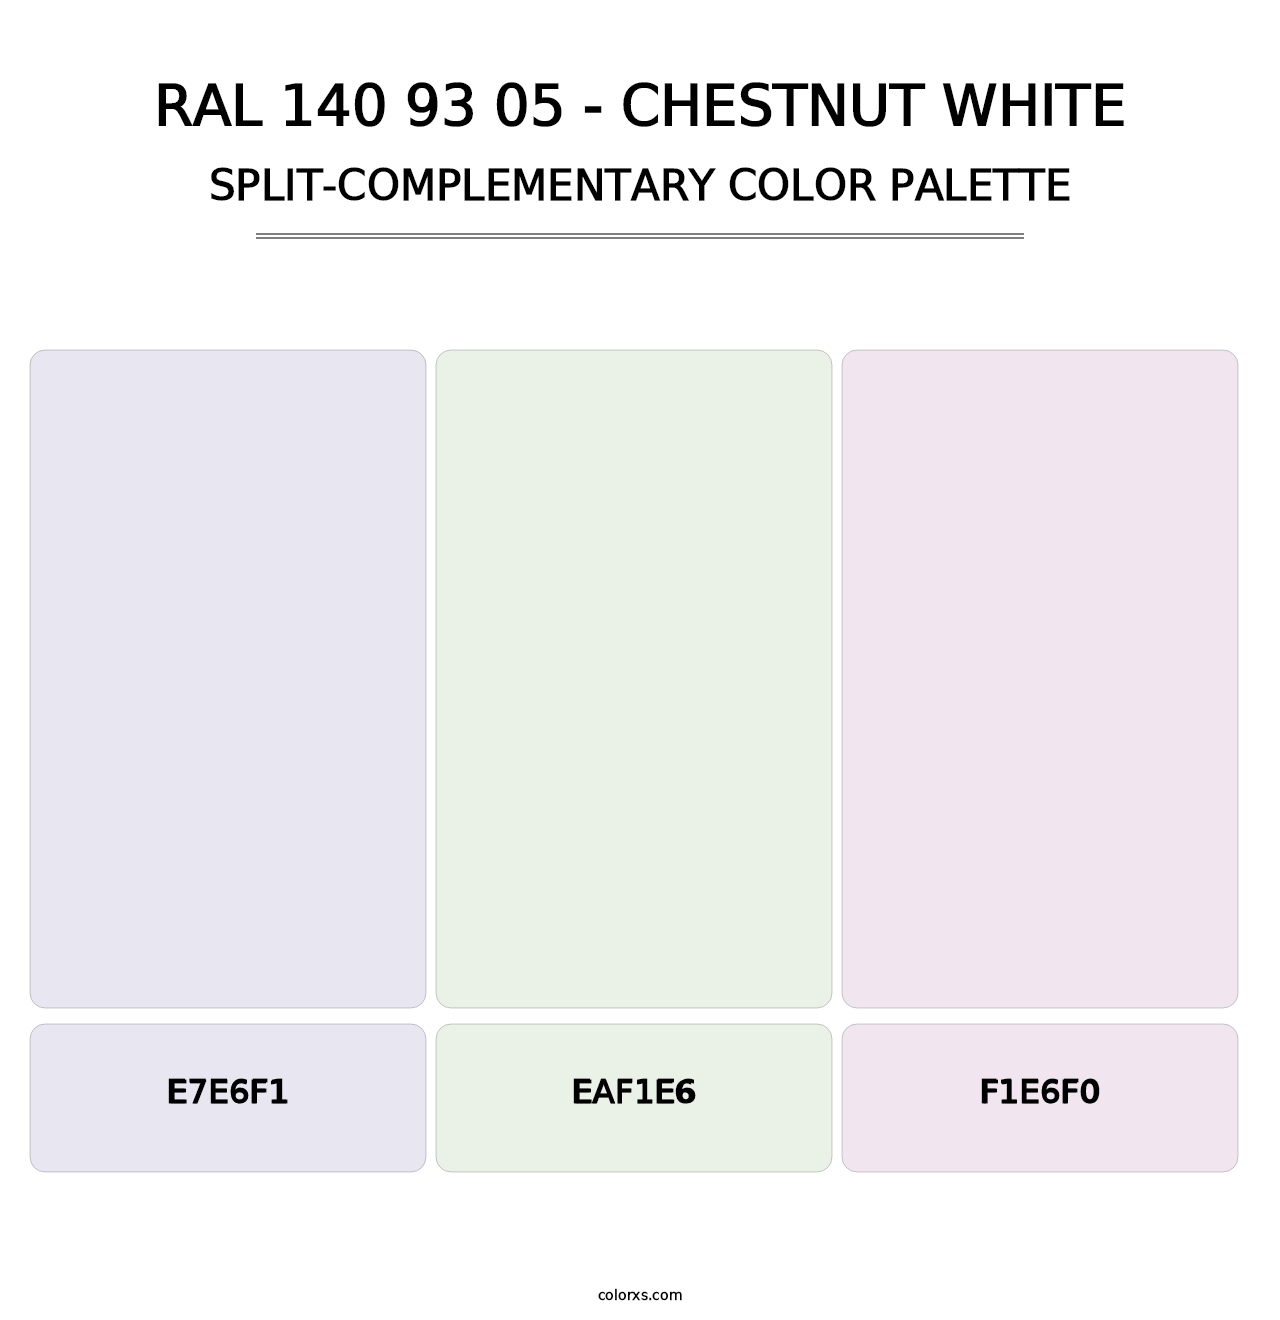 RAL 140 93 05 - Chestnut White - Split-Complementary Color Palette